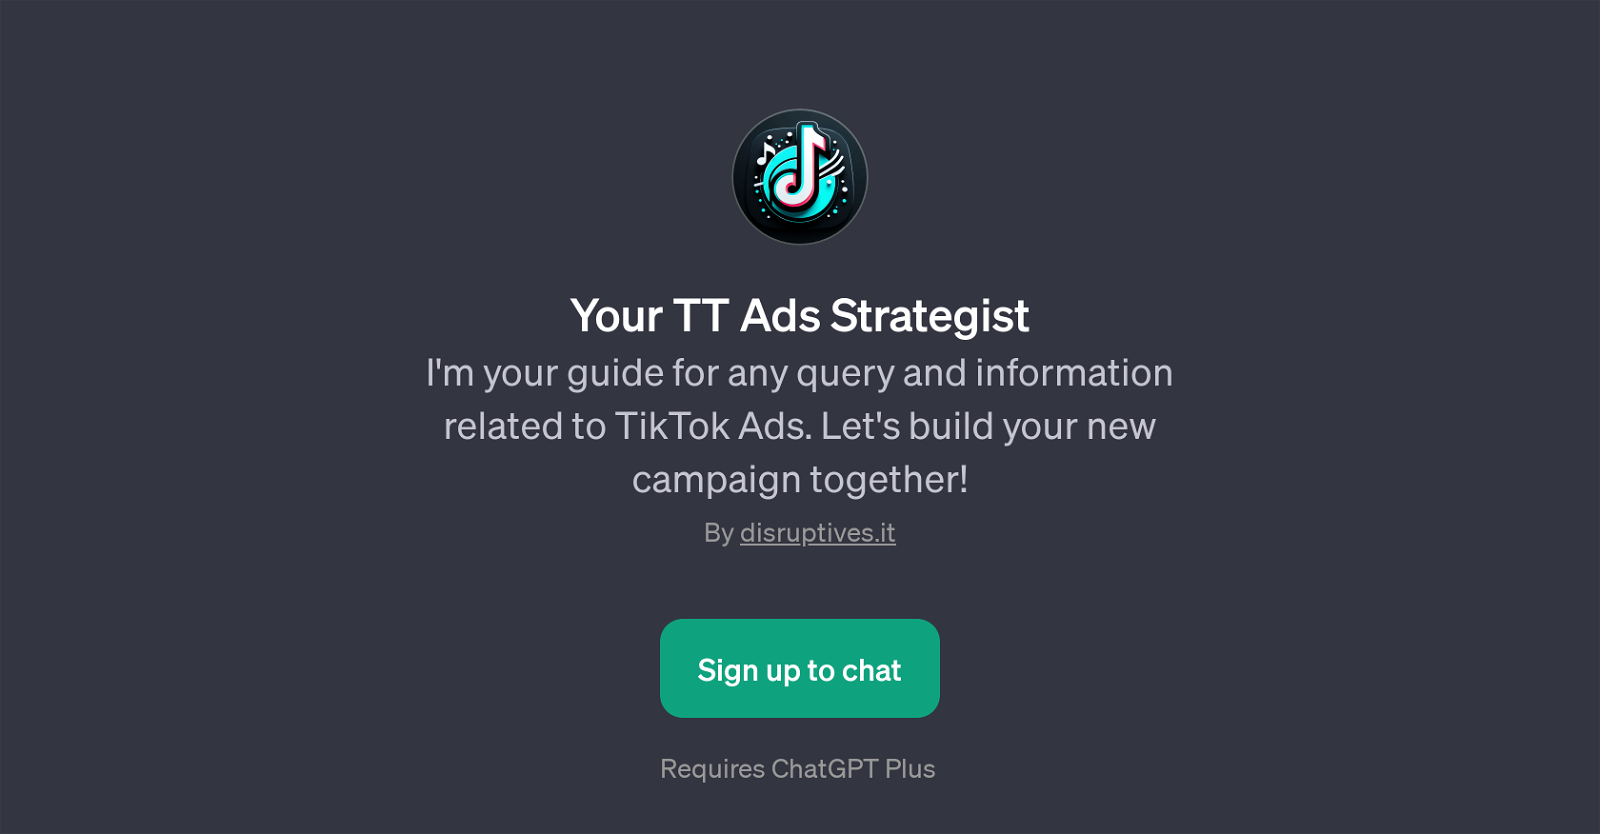 Your TT Ads Strategist website